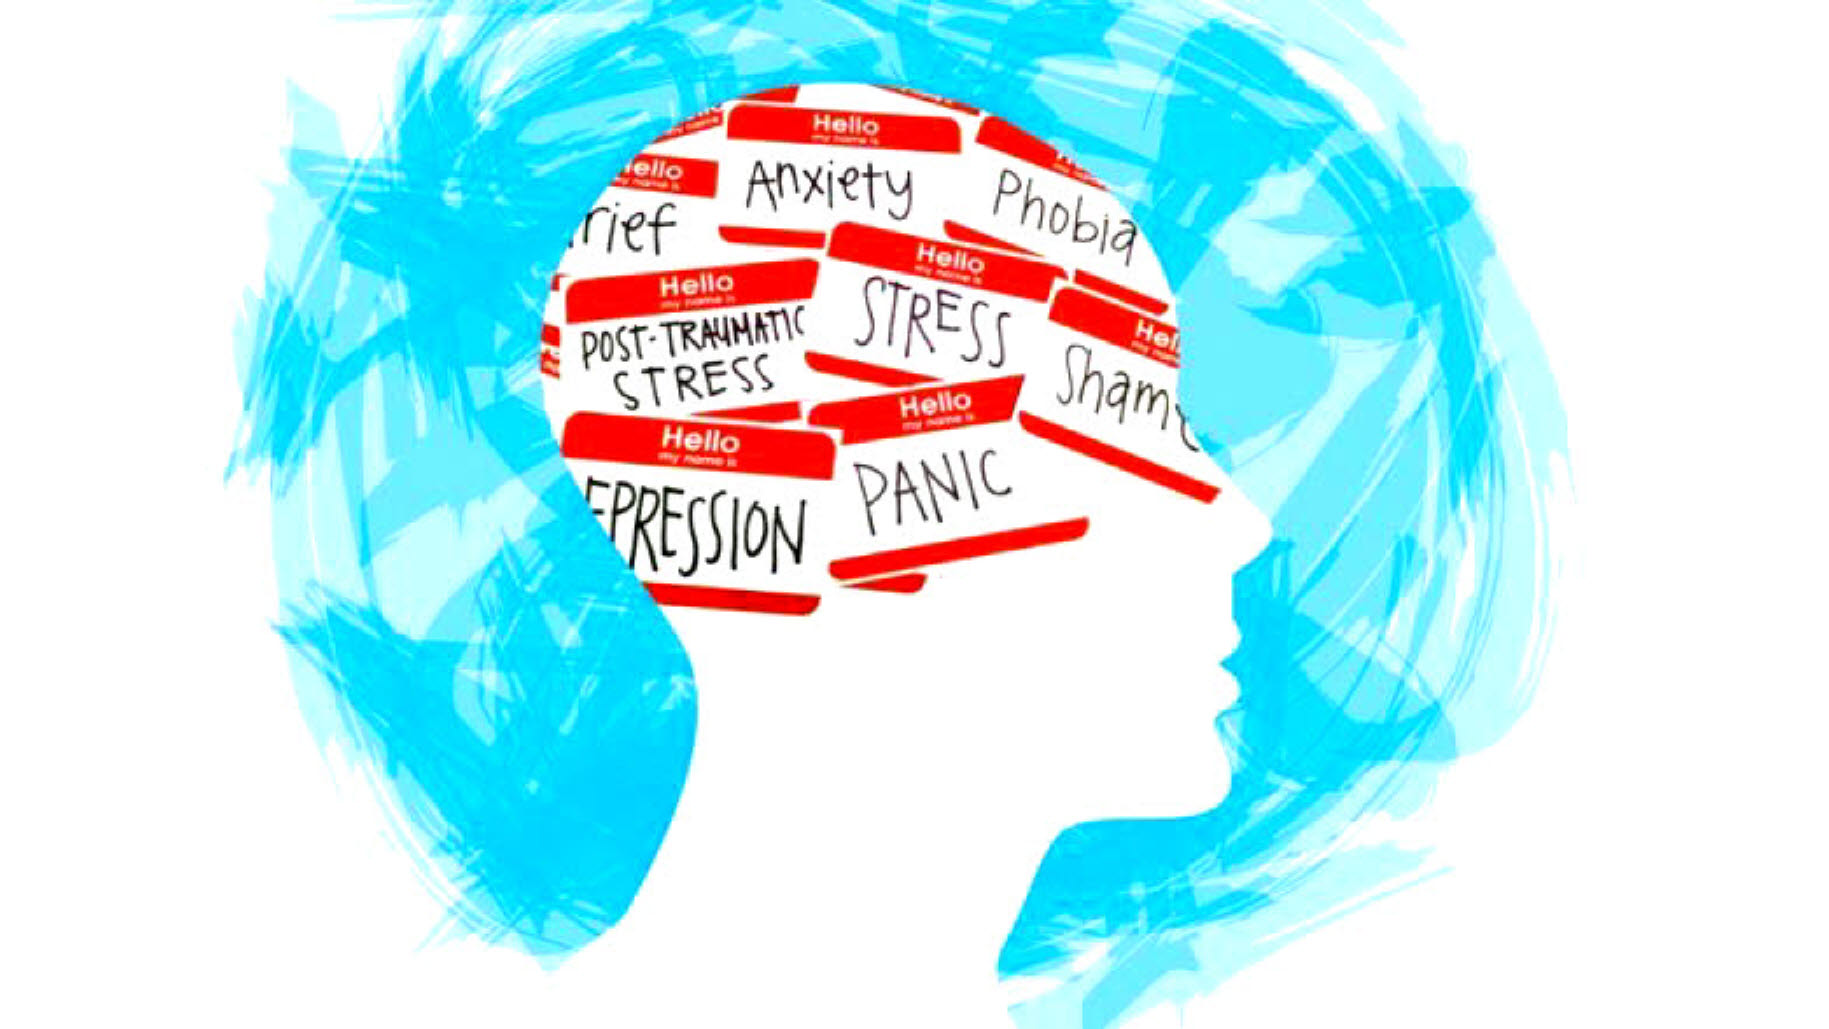 #JamesDonaldson On #MentalHealth – #ADHD And #BehaviorProblems